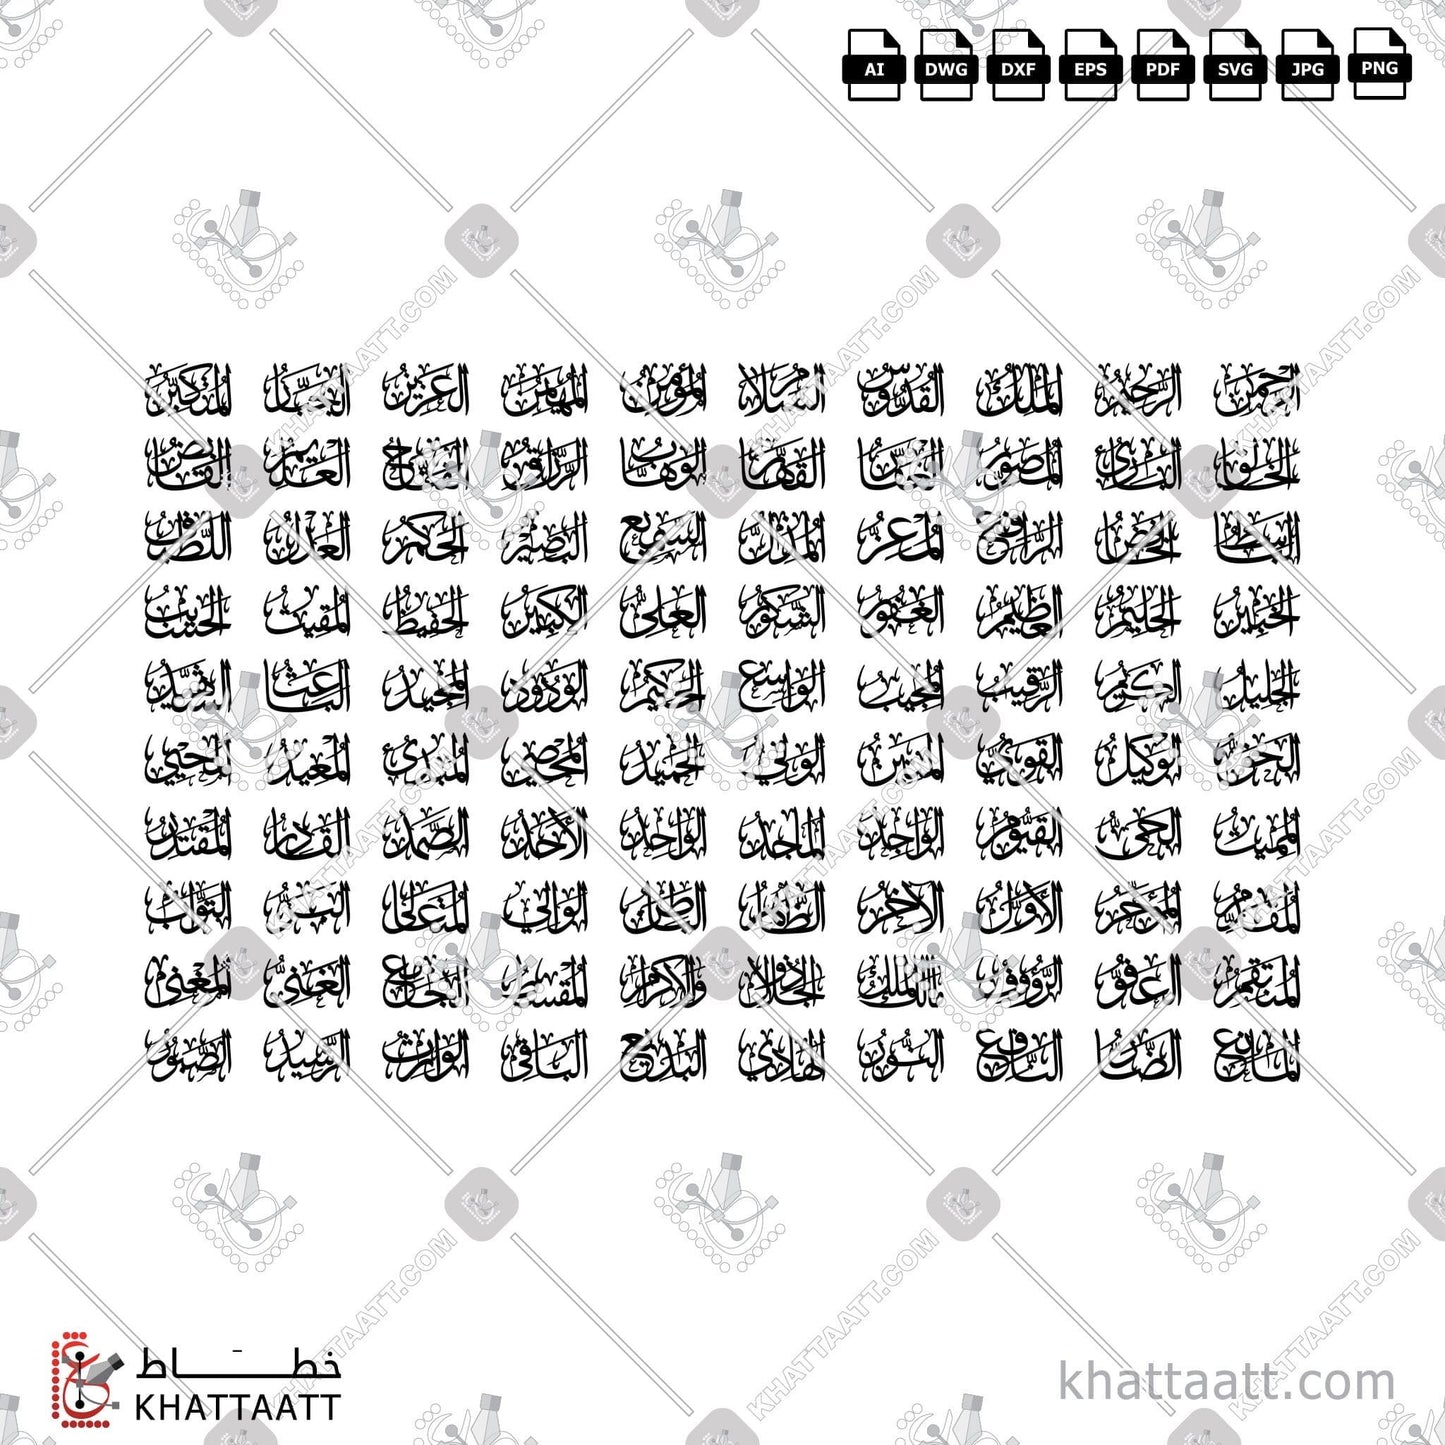 Digital Arabic calligraphy vector of 99 Names of Allah - أسماء الله الحسنى in Thuluth - خط الثلث